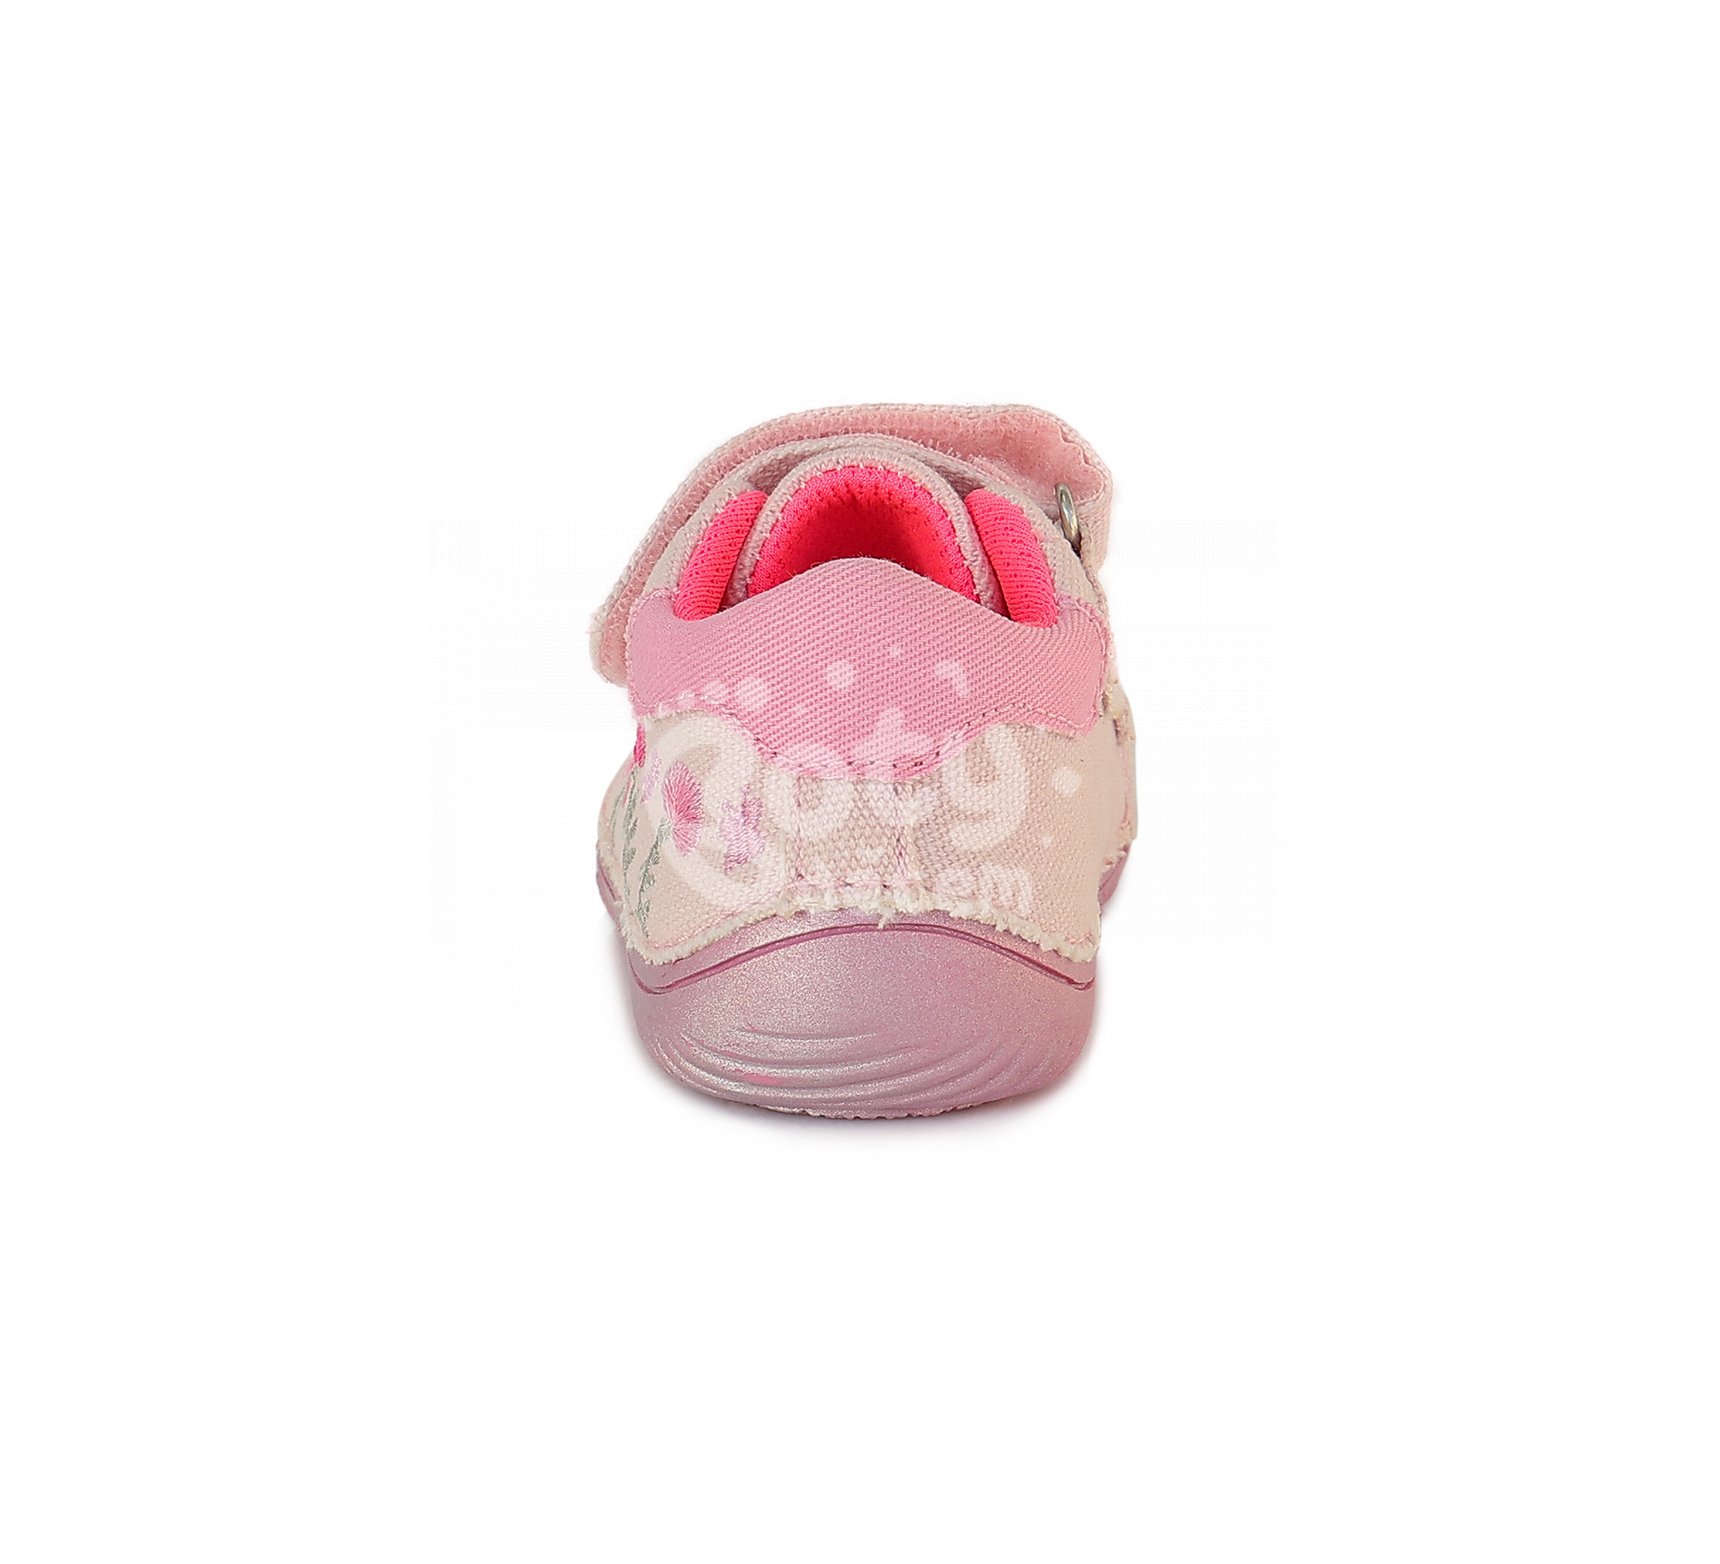 Barefoot plátěné tenisky D.D.step C073-120 Baby Pink